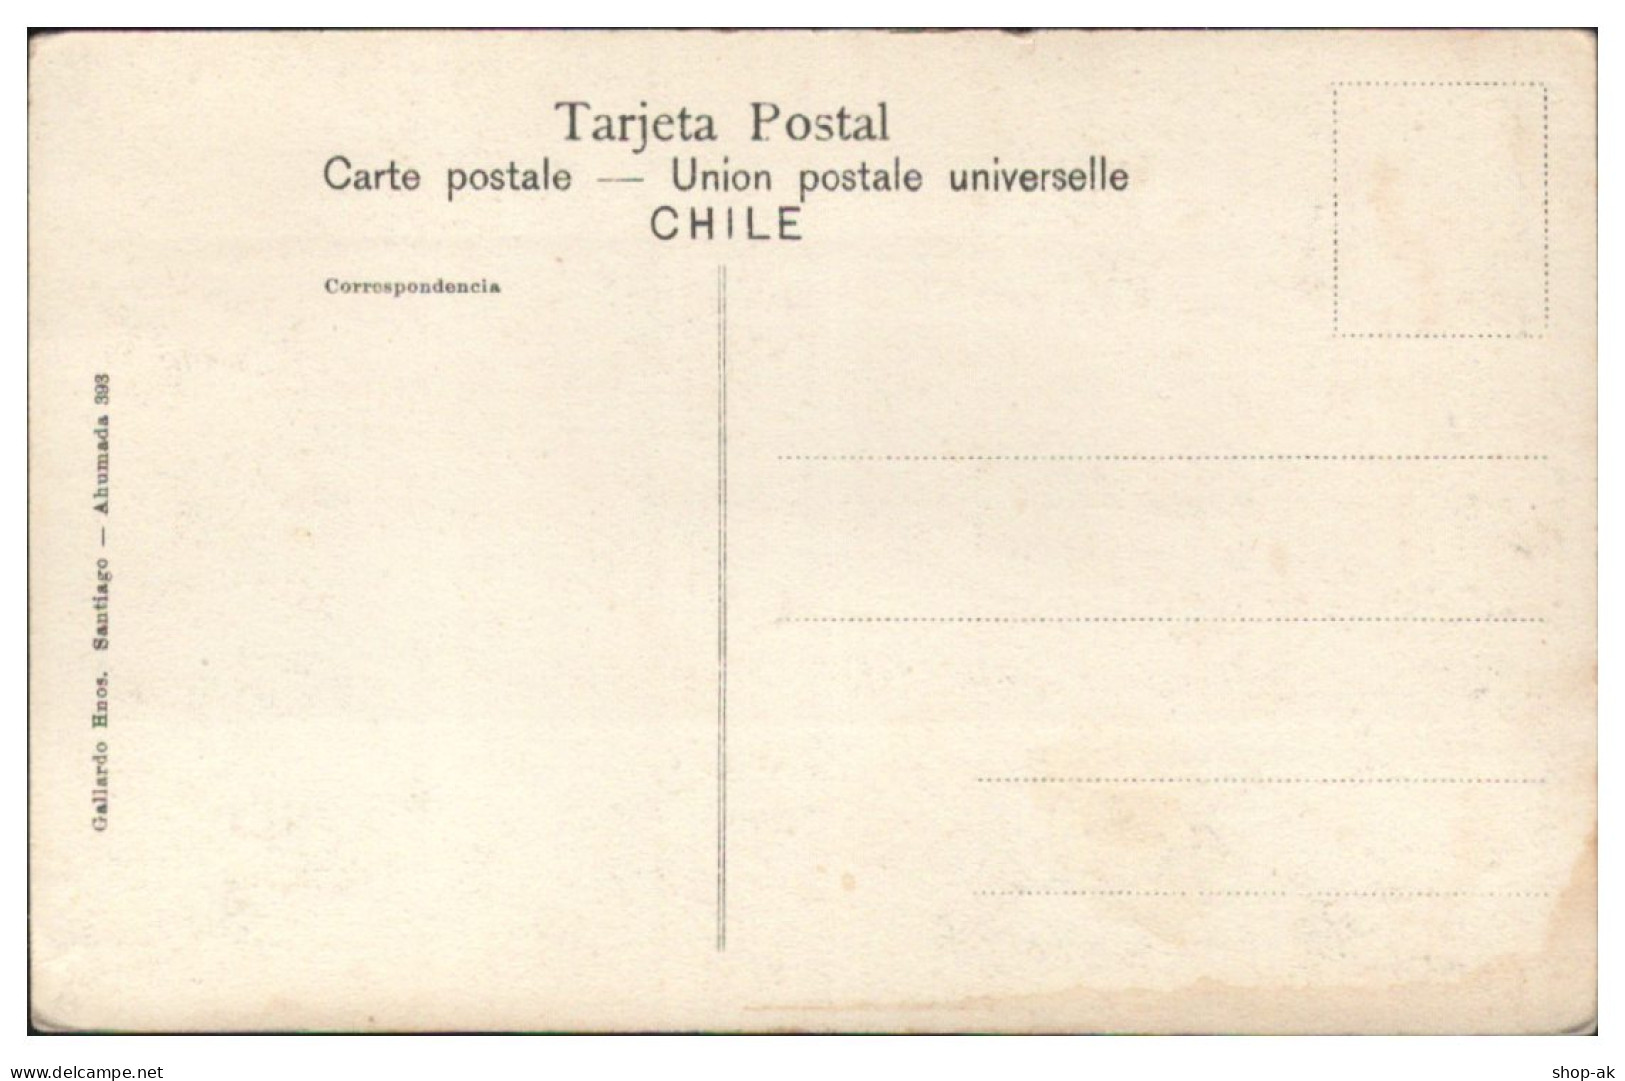 TT0007/ Santiago  Calle De La Merced Hacia   Chile AK  Ca.1910 - Cile